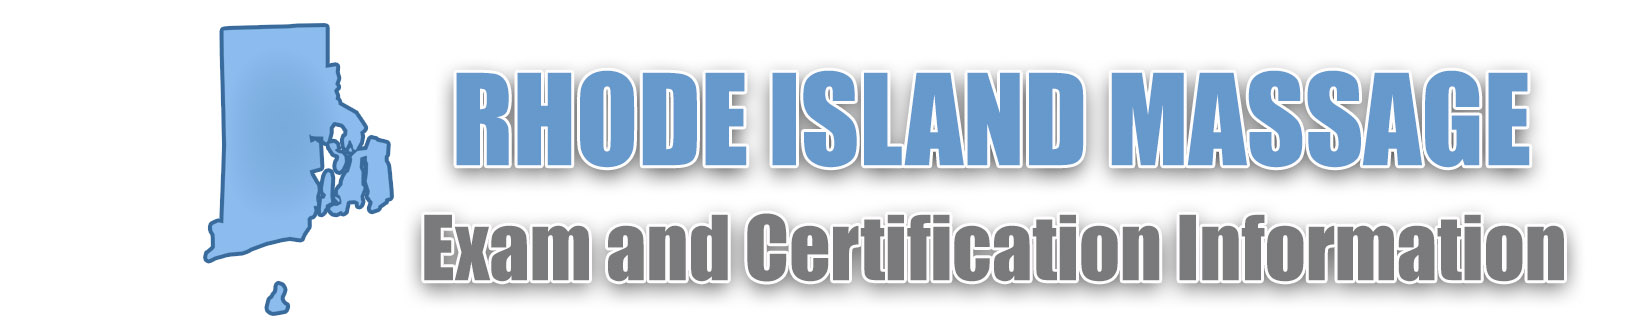 Rhode Island MBLEX Massage Exam and Certification Information